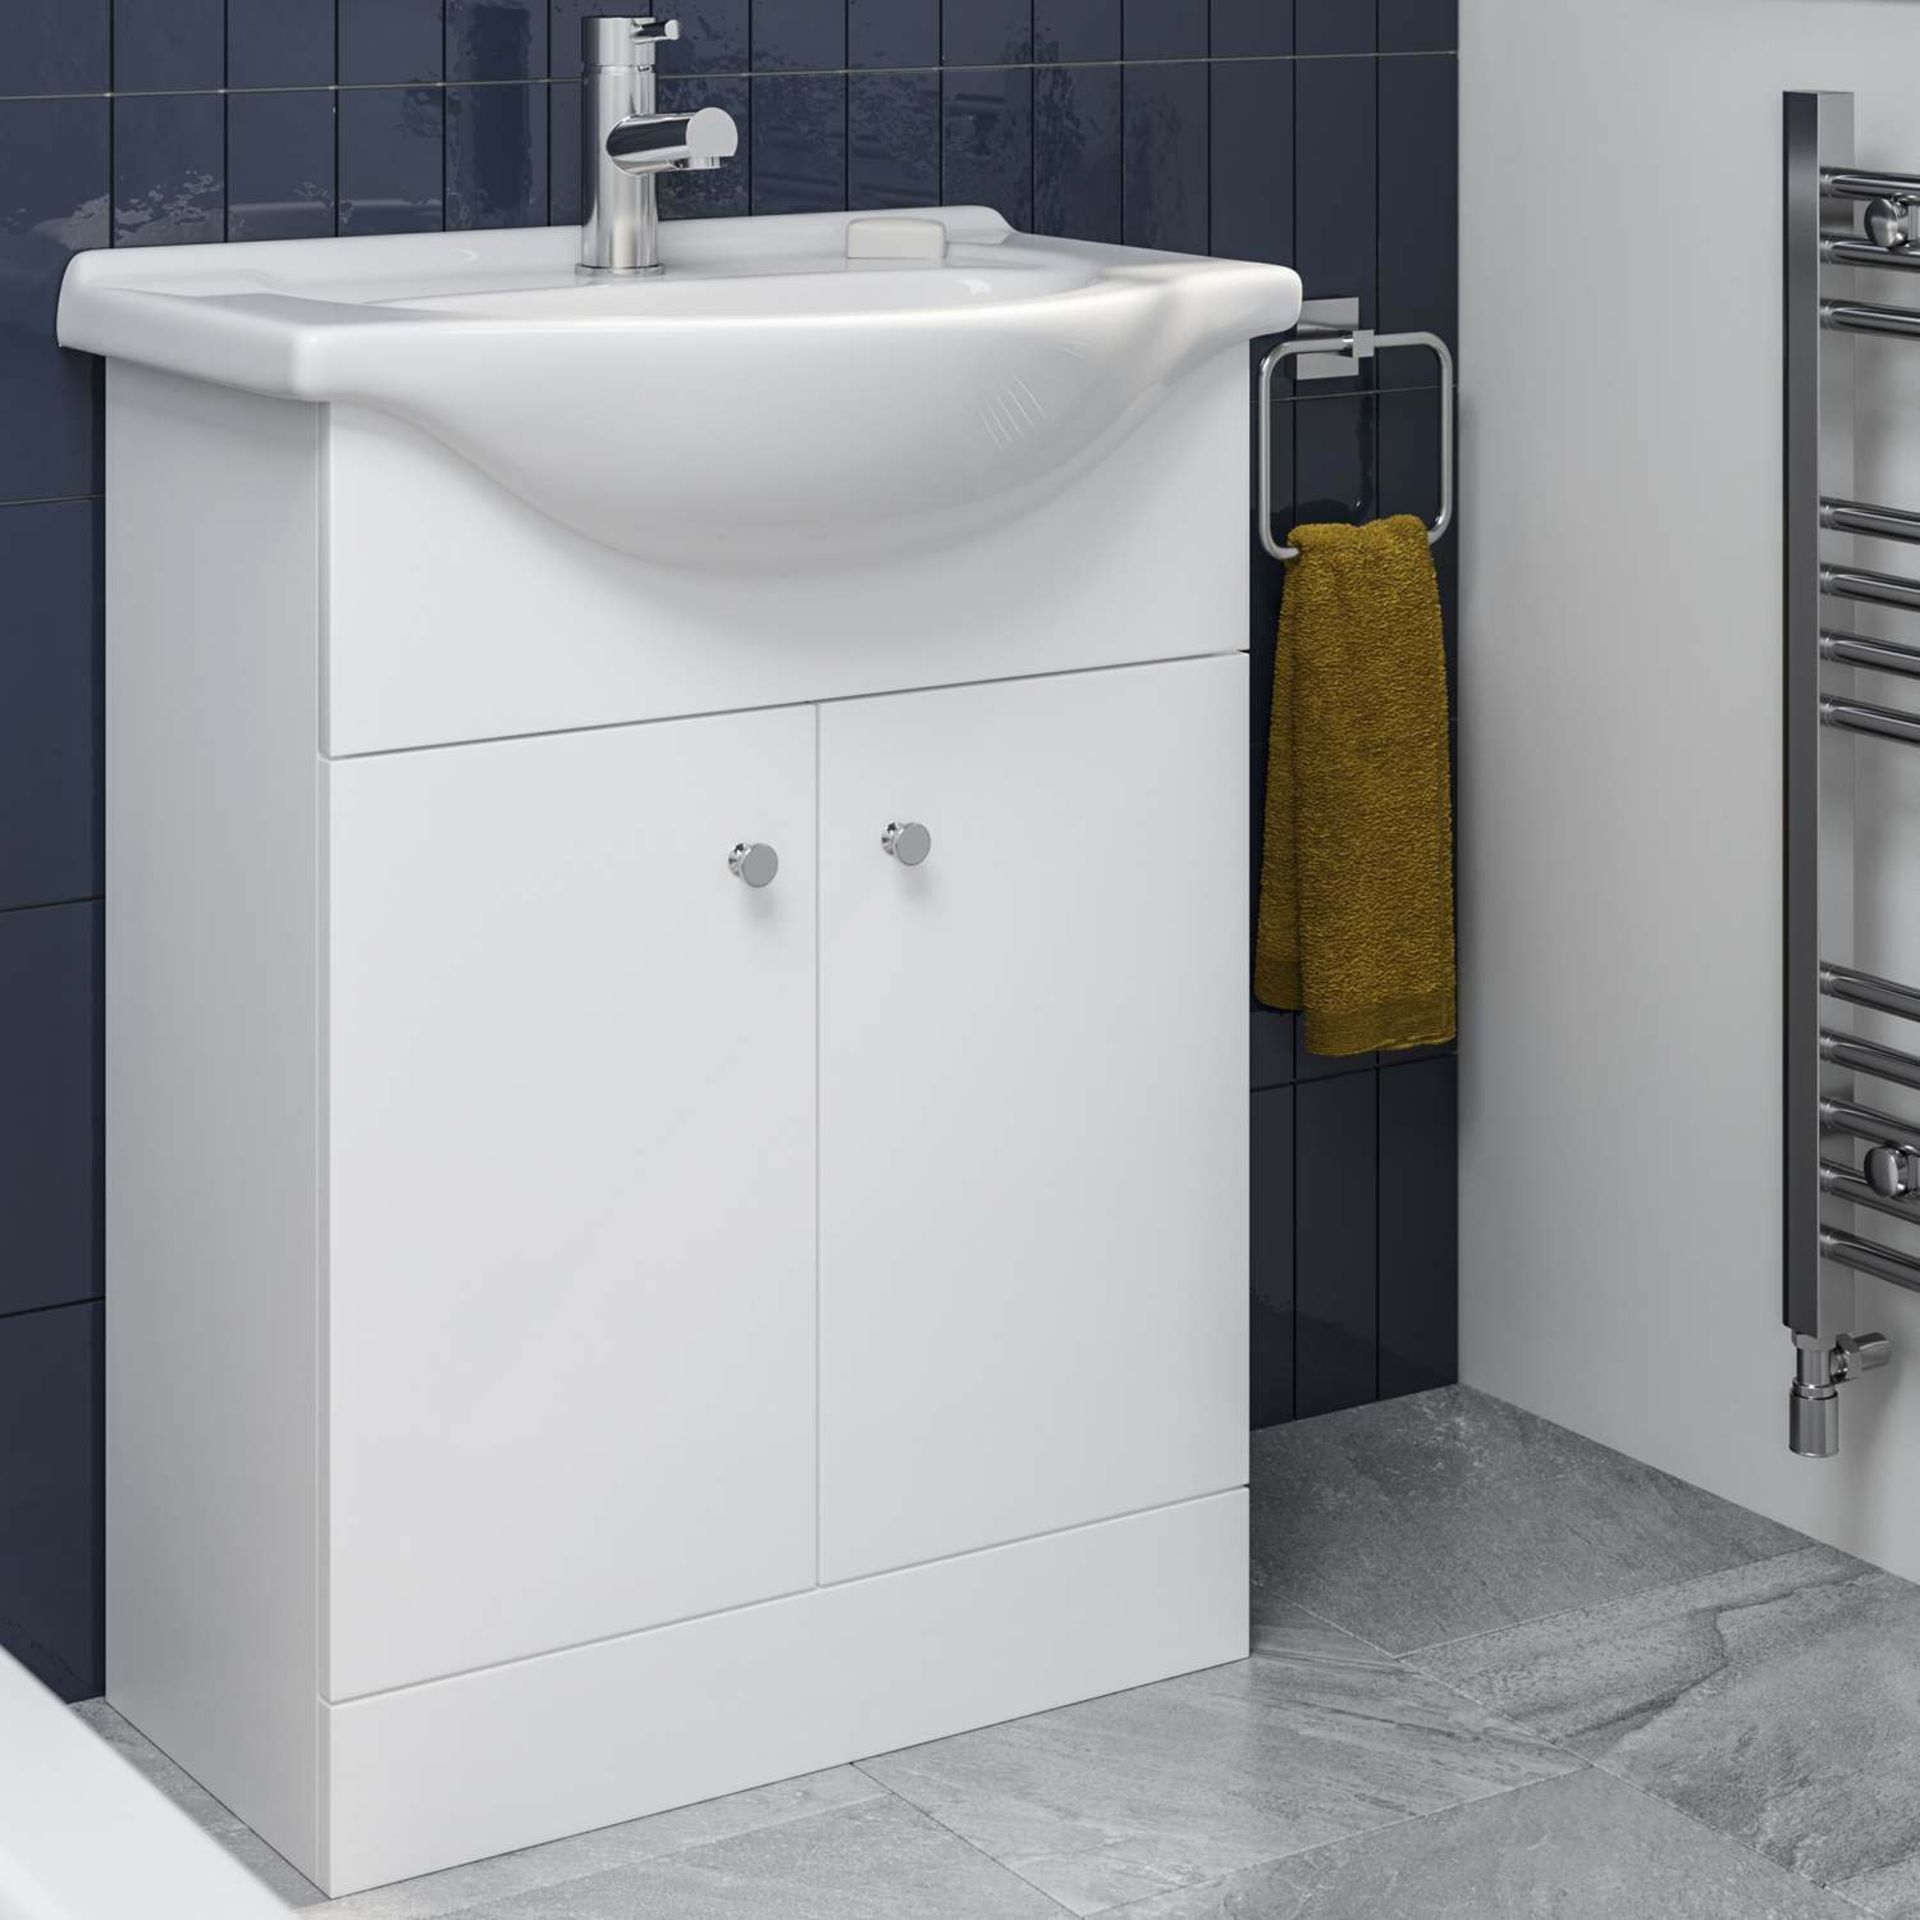 NEW & BOXED 650mm Quartz White Basin Vanity Unit- Floor Standing. RRP £399.99.Comes complete ...